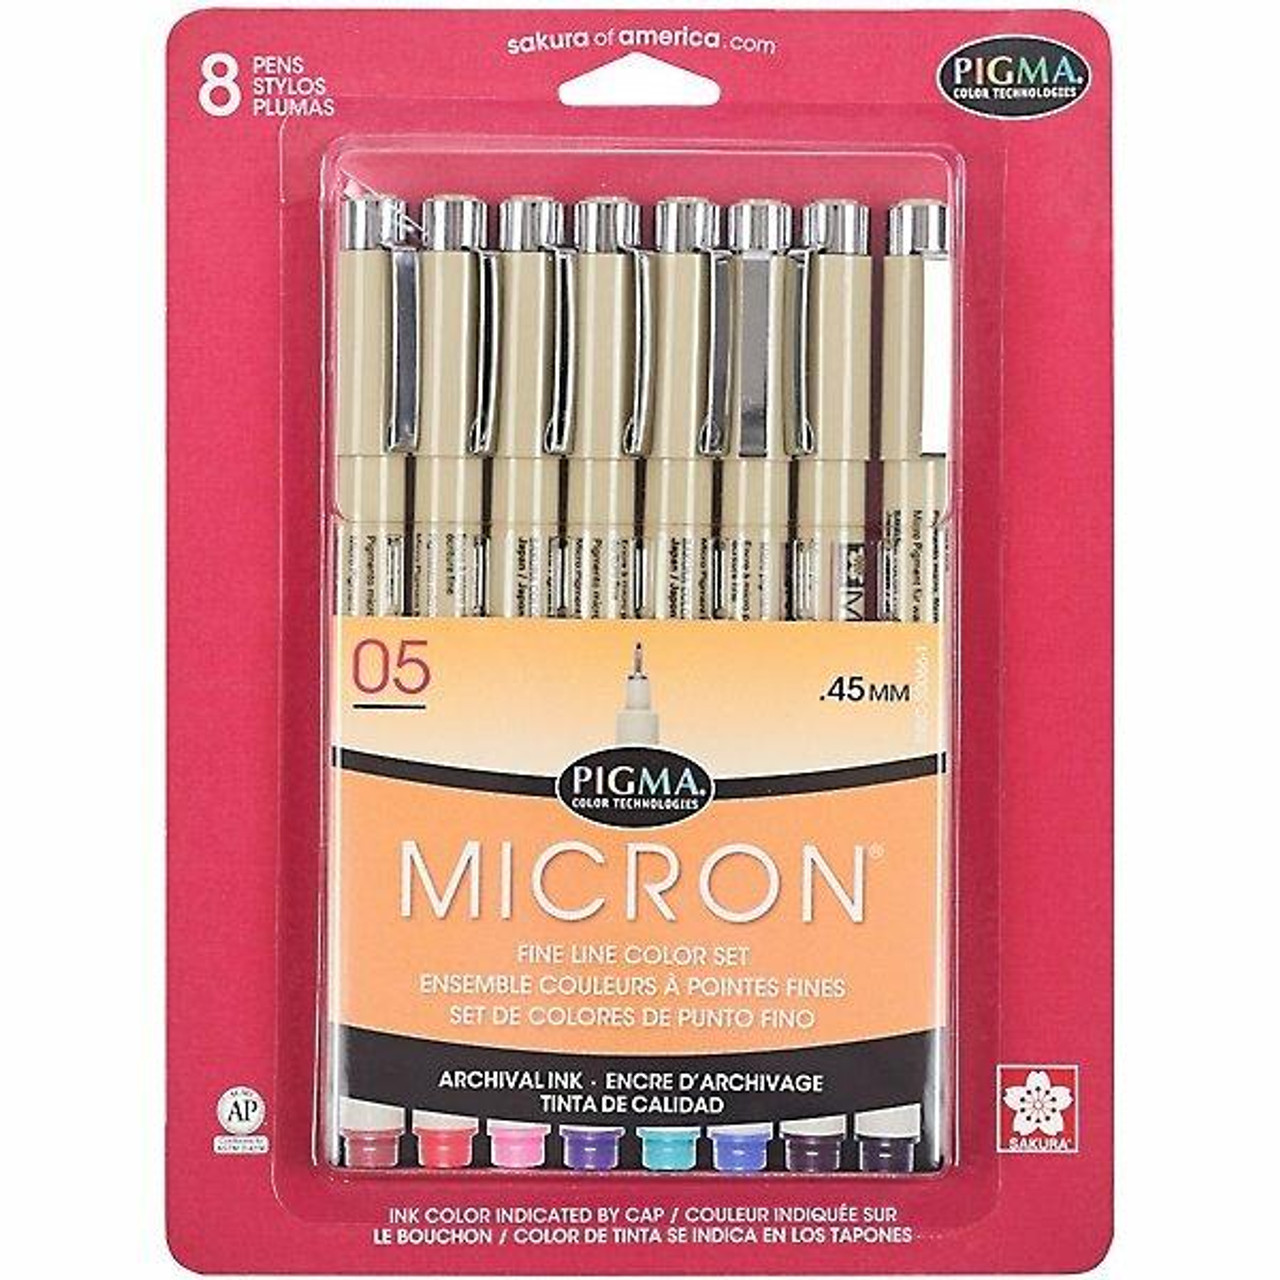 Sakura Pigma Micron Ultra-fine Colored Pen Set